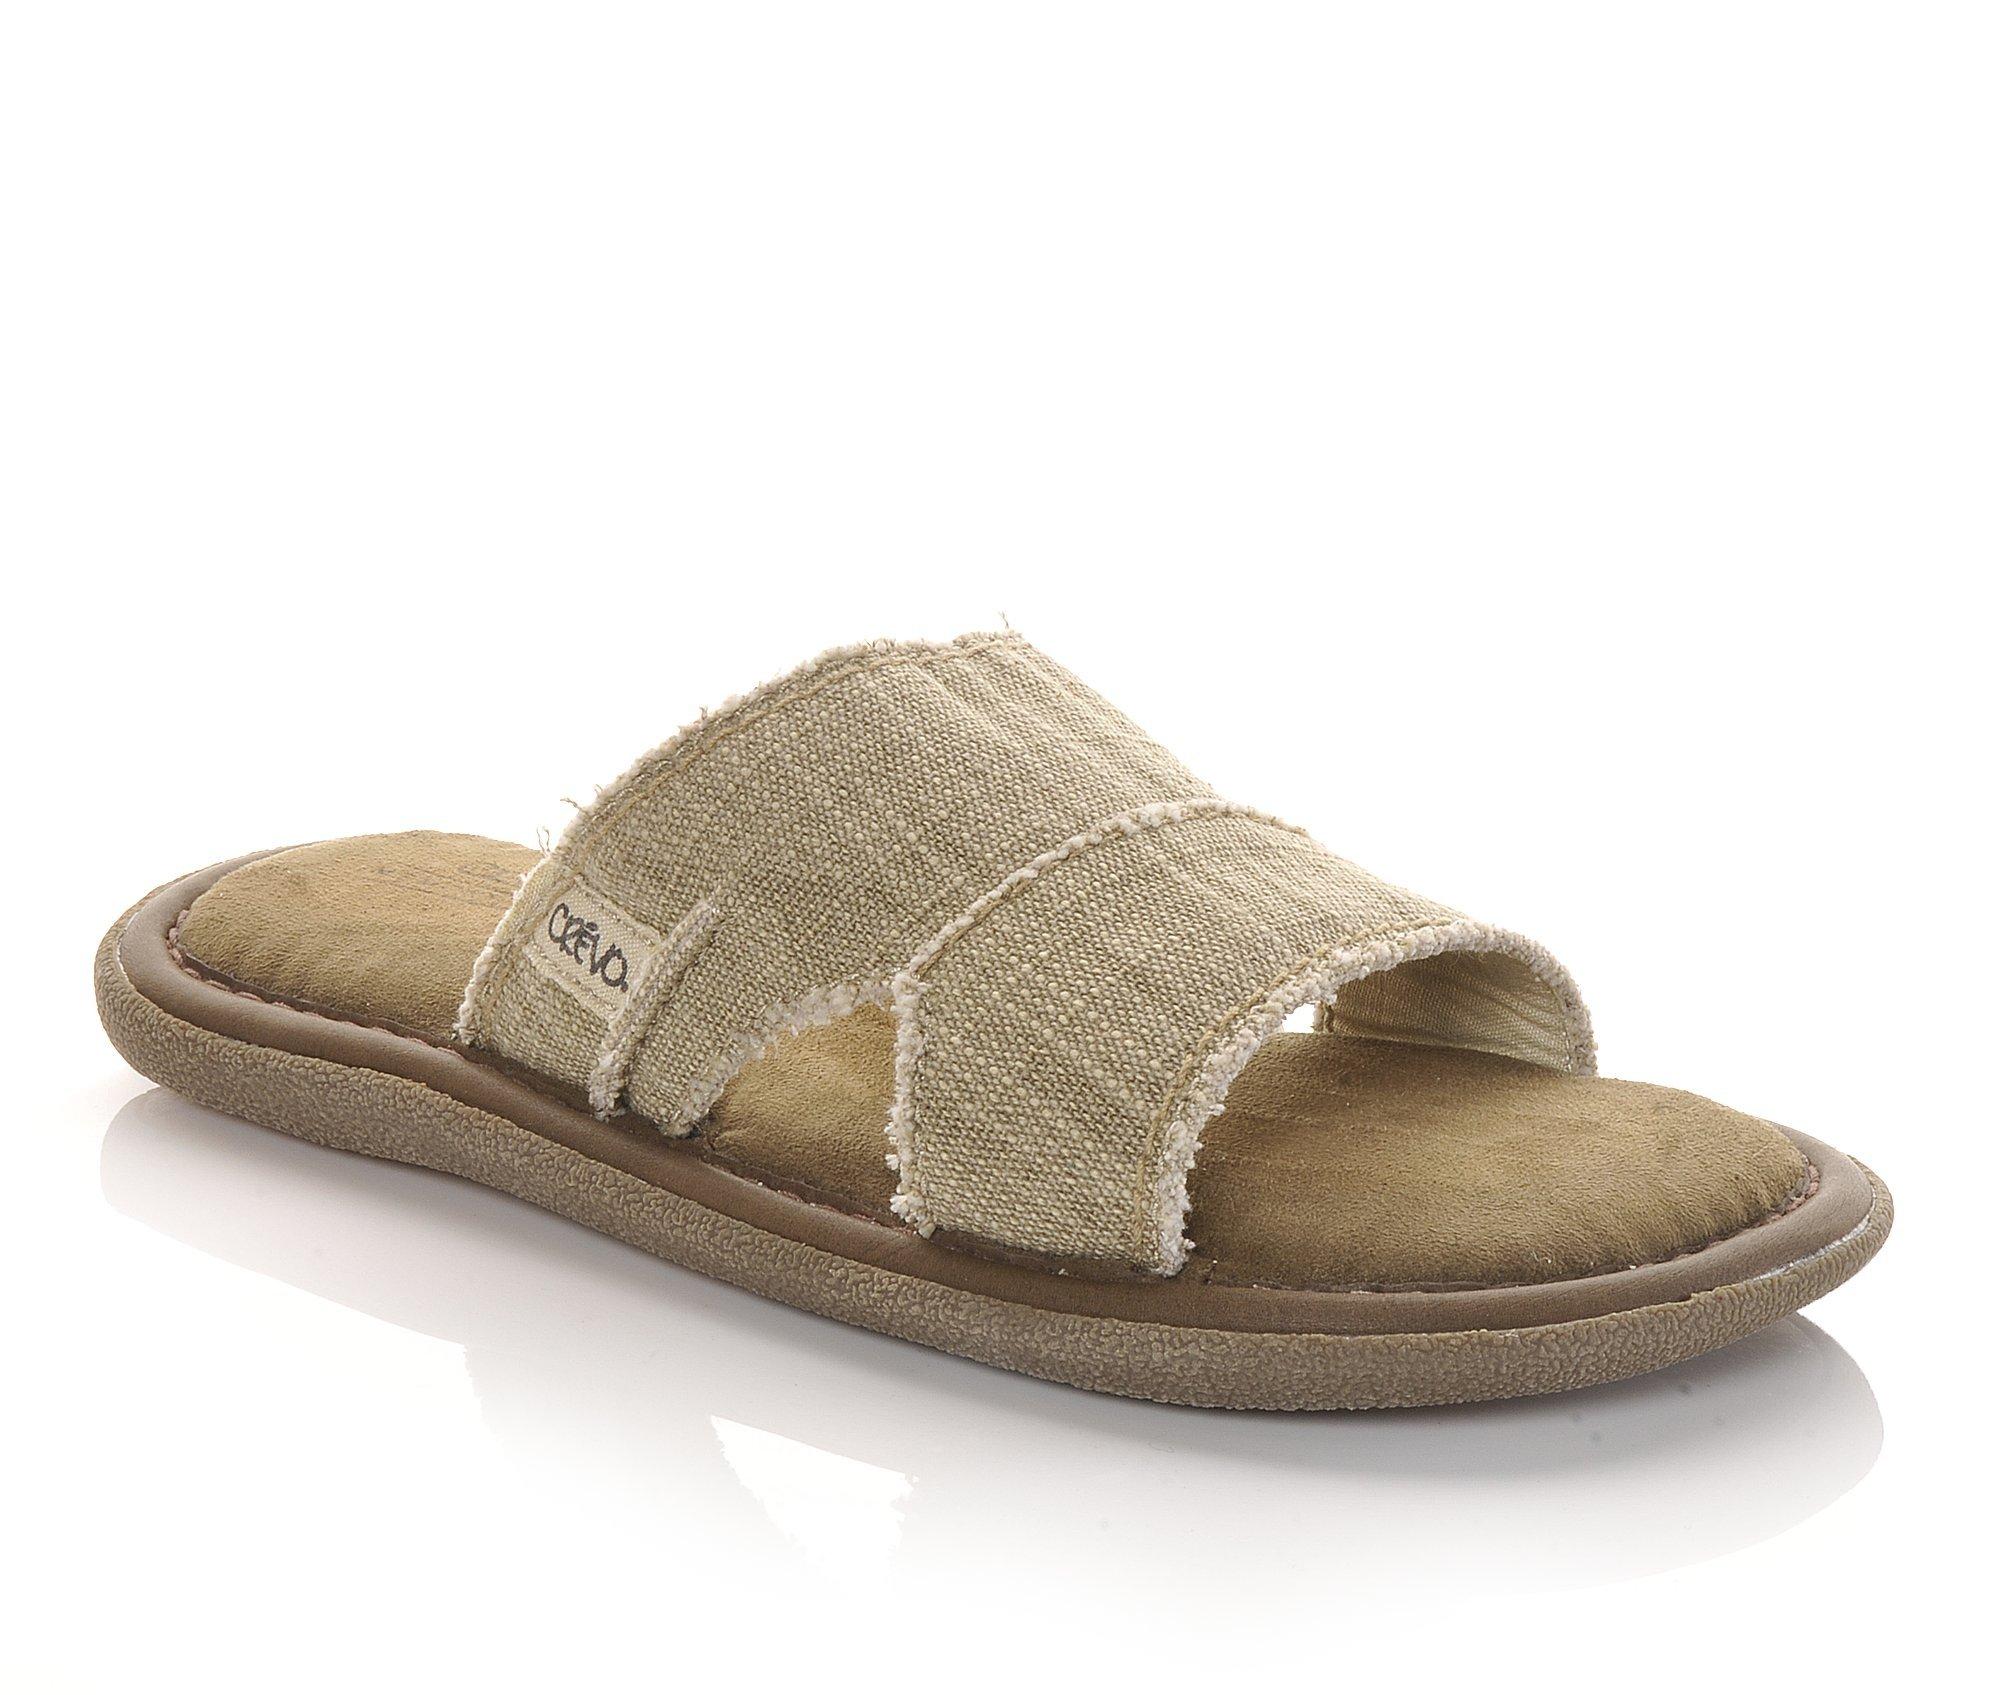 Crevo Cory Frayed Hemp Memory Foam Slide Sandals for Men